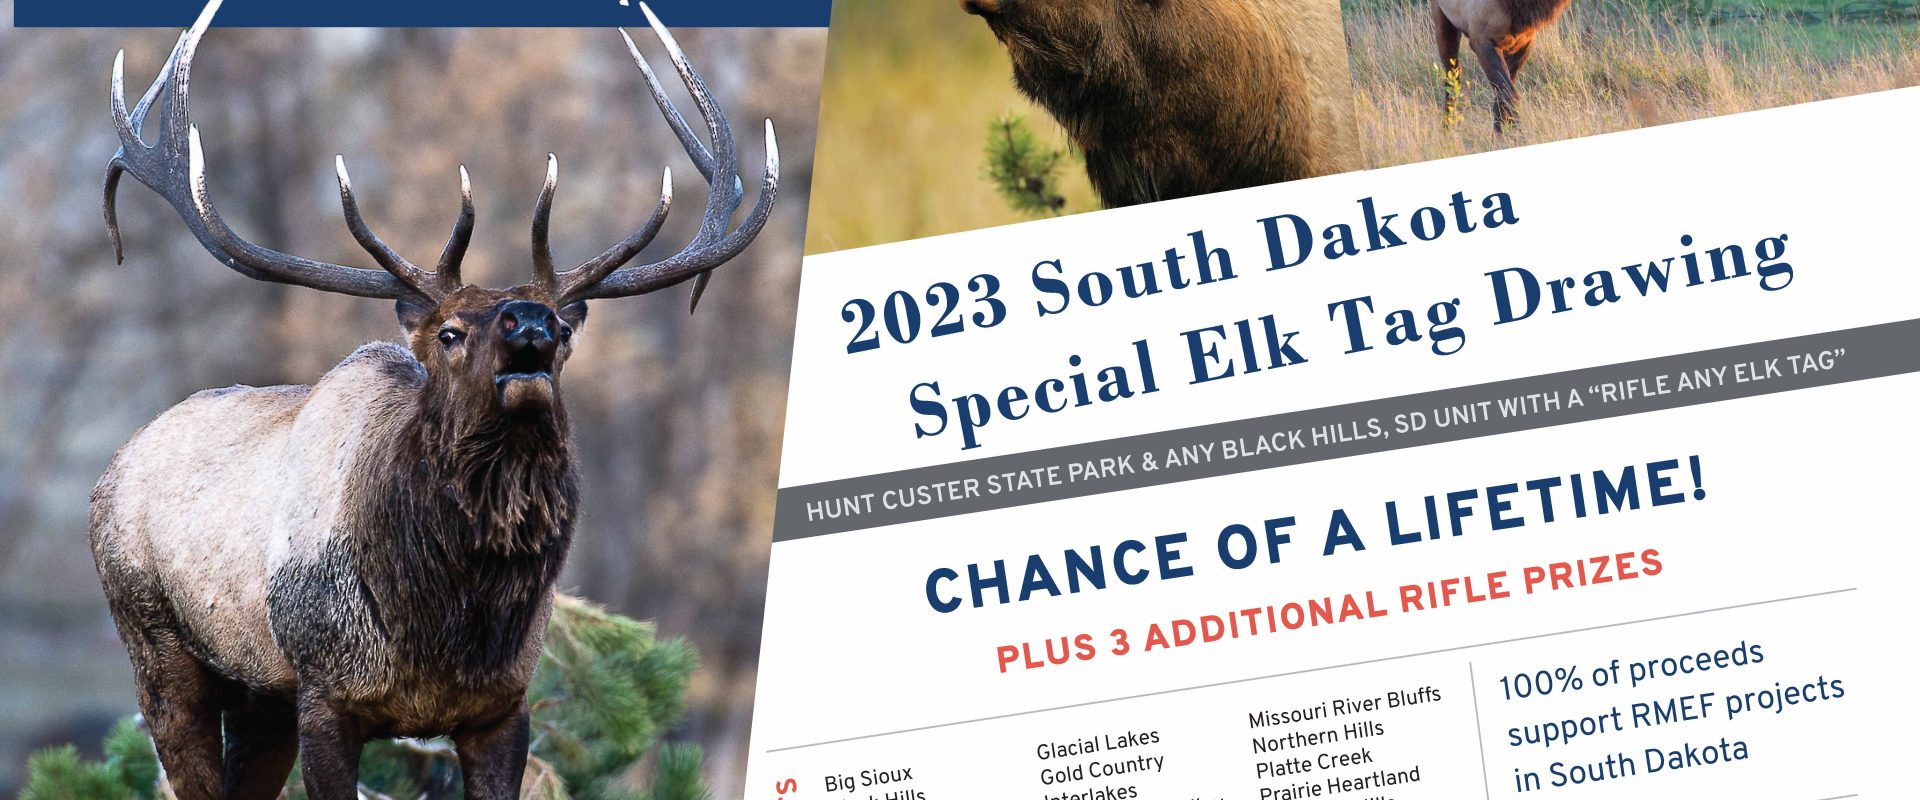 2023 South Dakota Special Elk Tag Drawing South Dakota Rocky Mountain